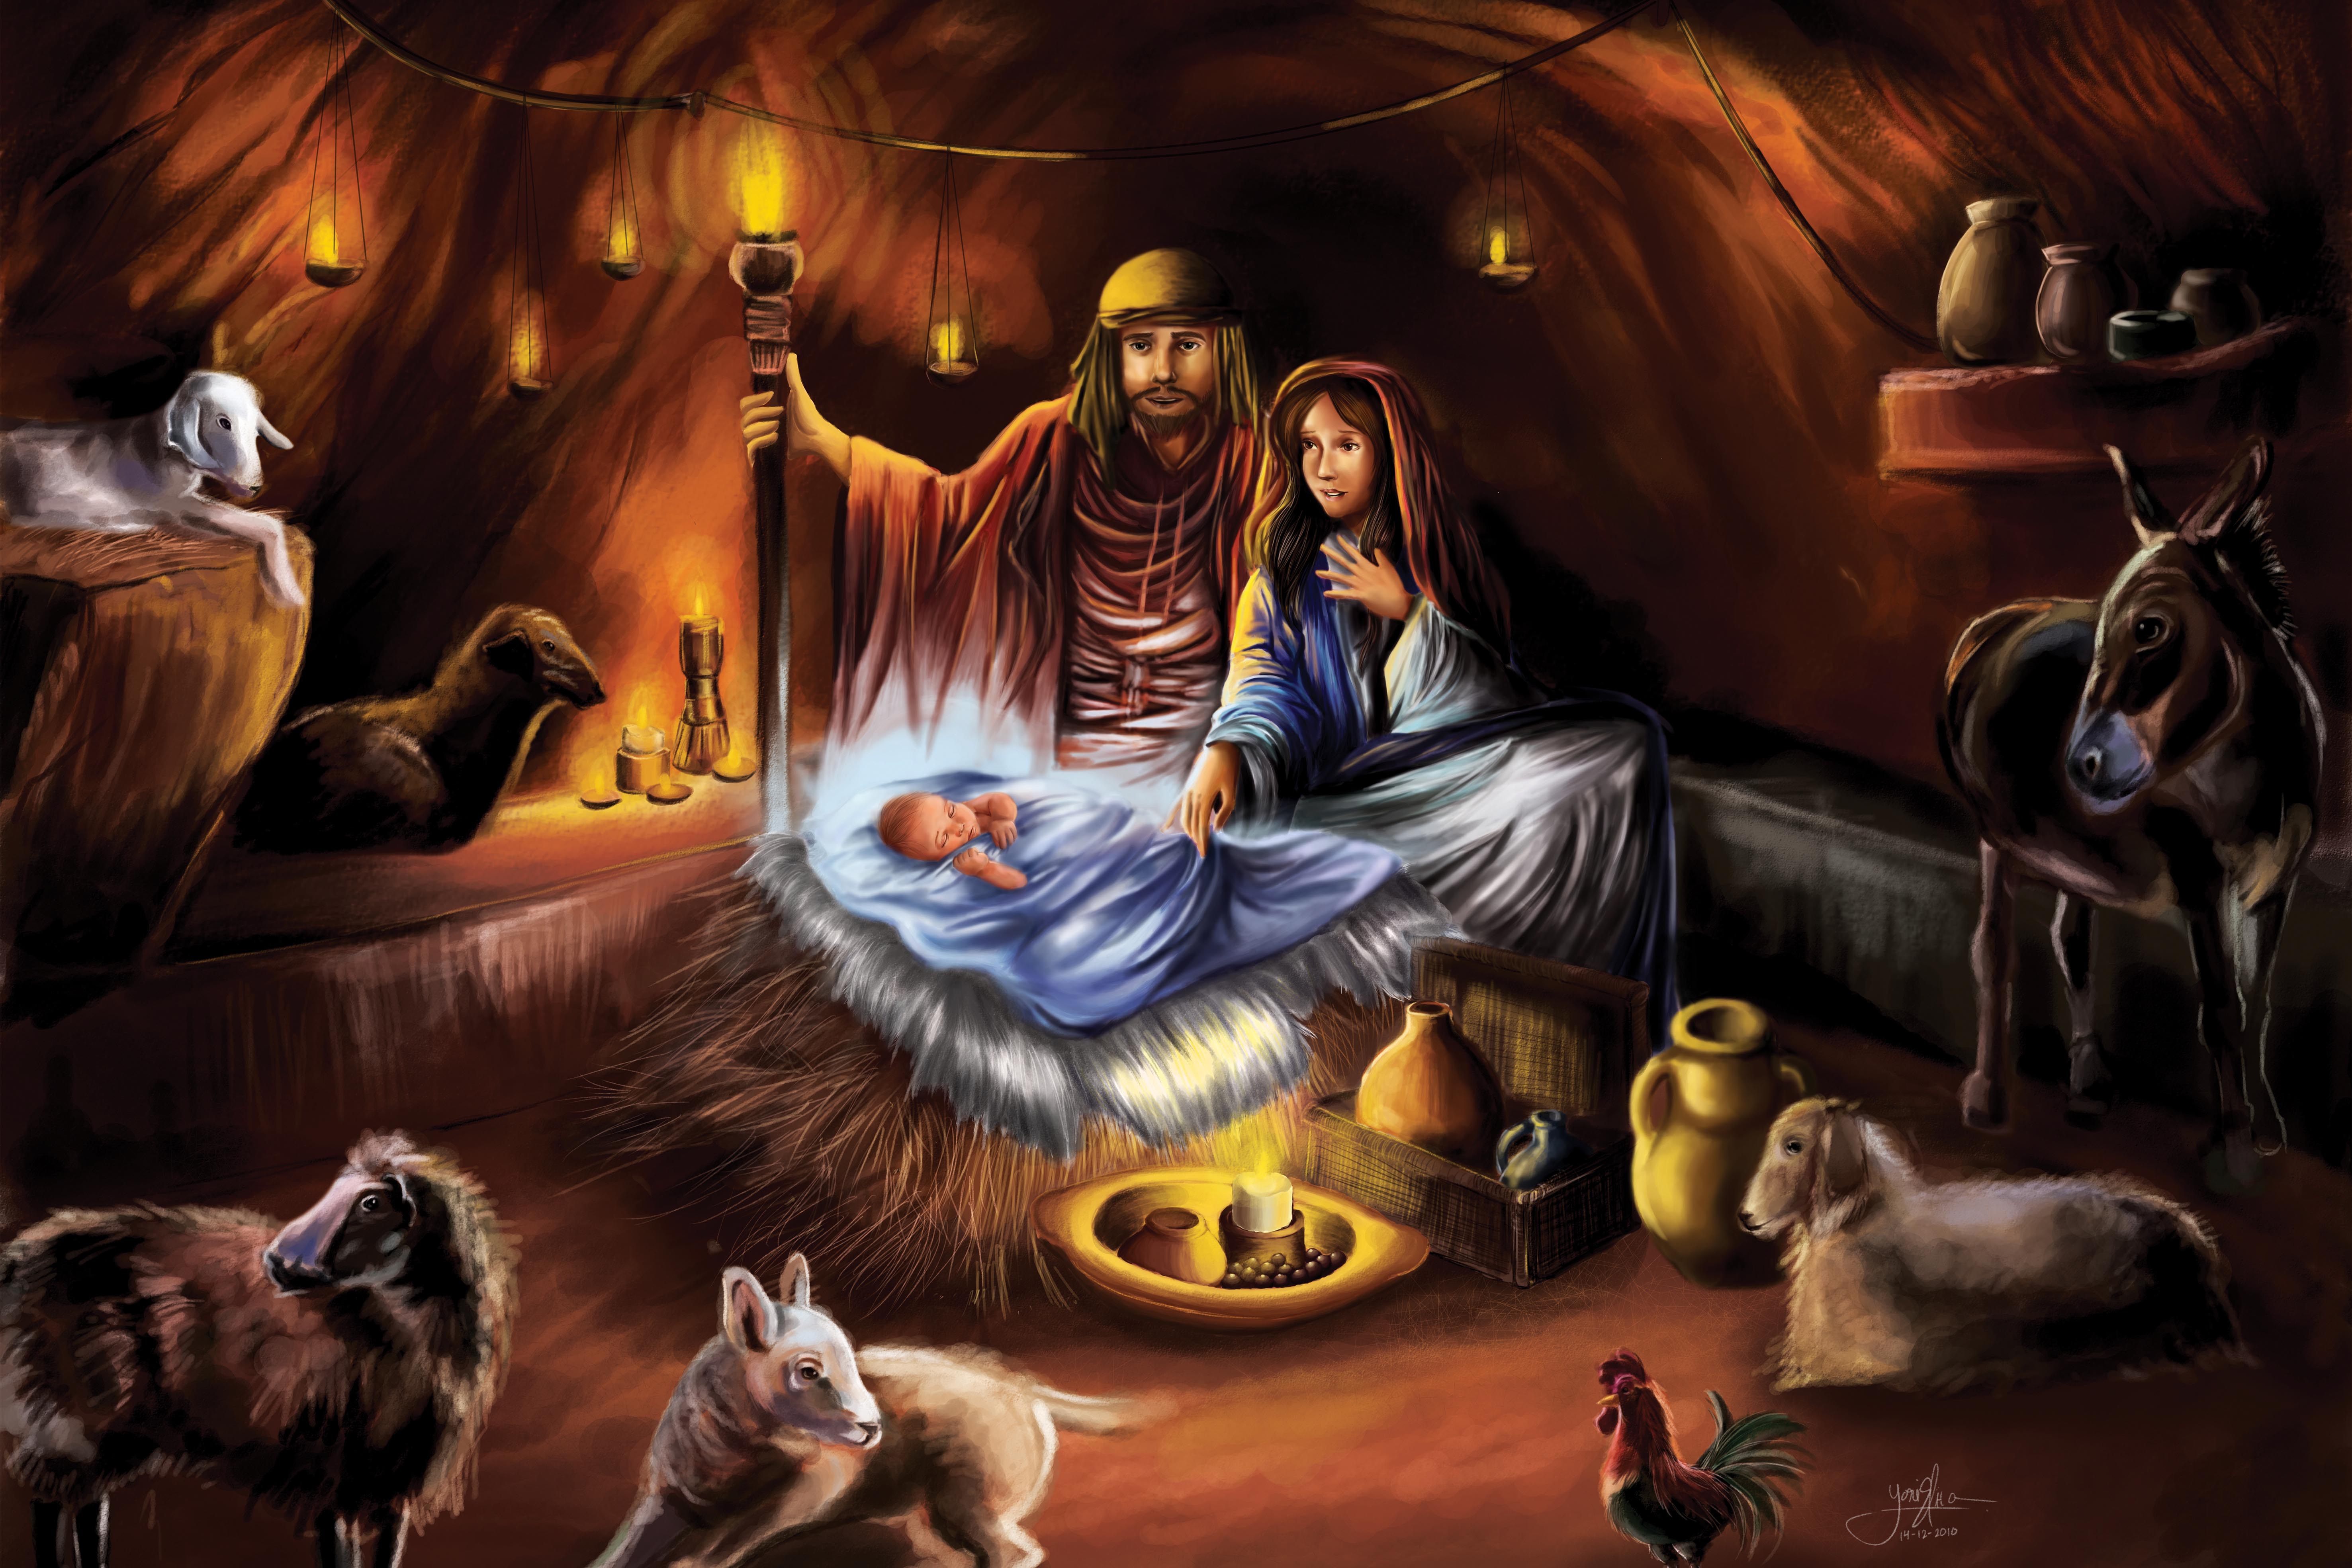 Birth of Christ Background. Birth of Christ Wallpaper, Kingdom Hearts Birth by Sleep Wallpaper and Green Lantern Rebirth Wallpaper